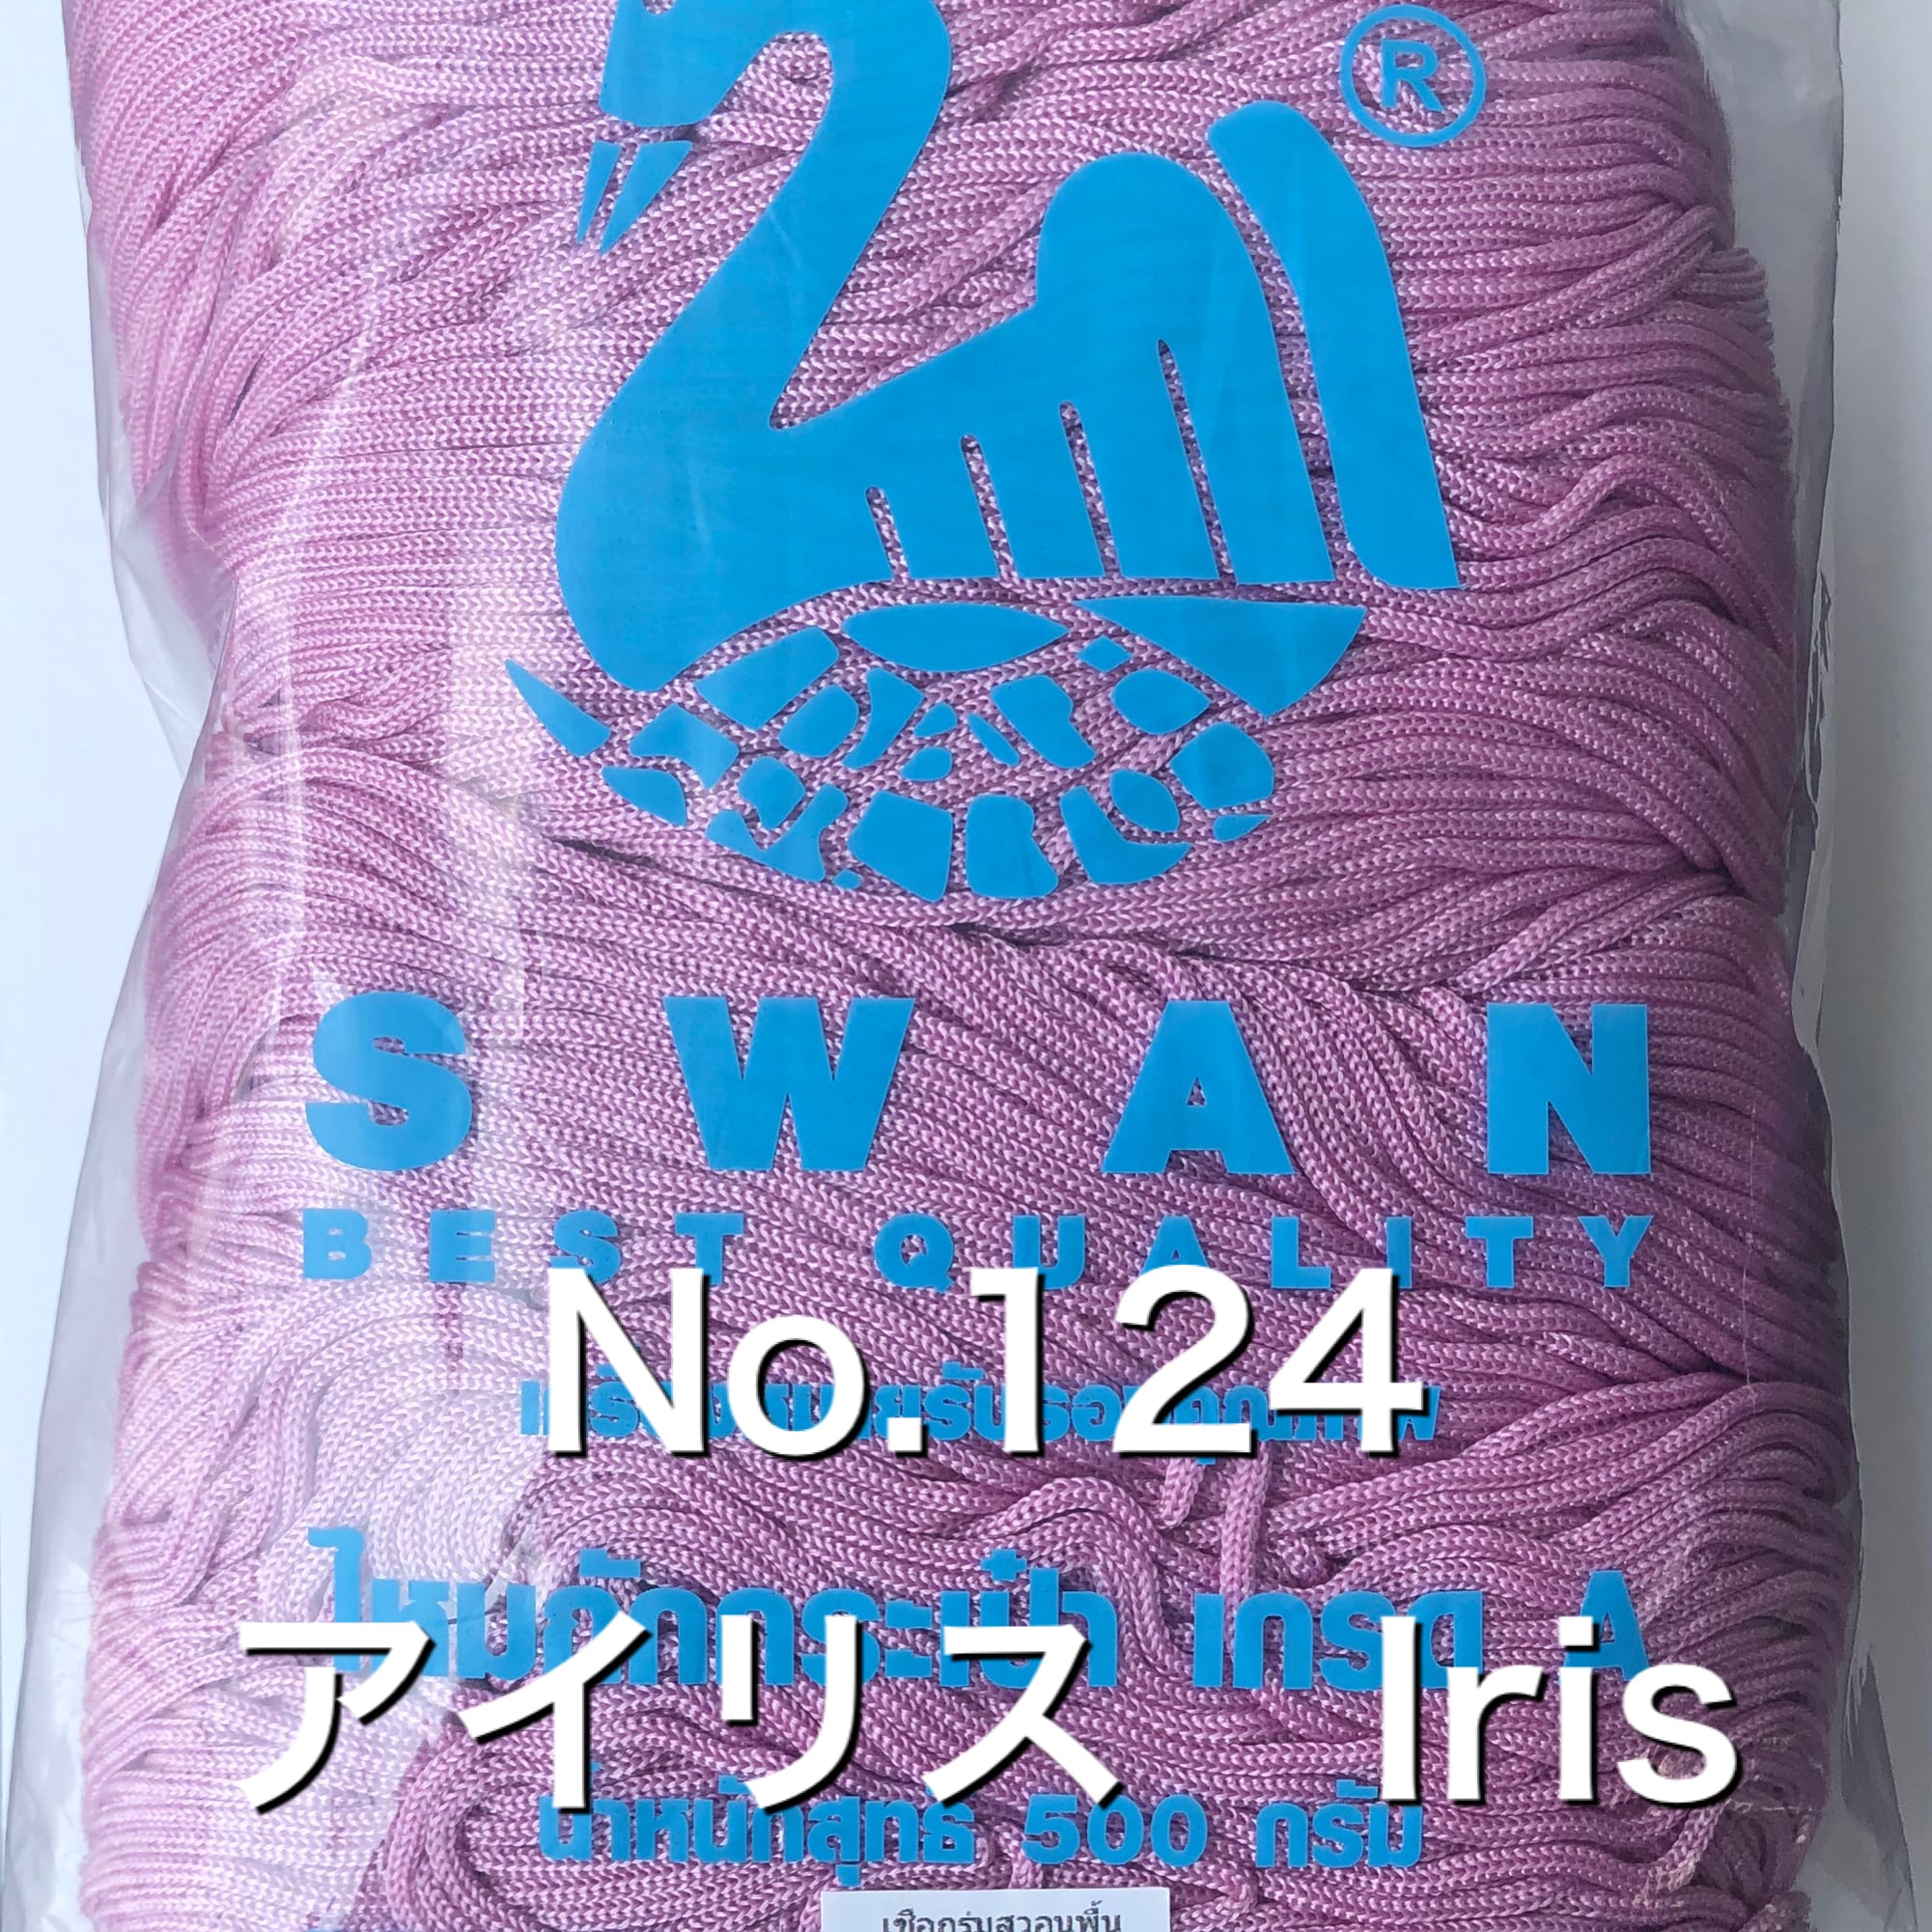 SWAN マクラメ糸 かぎ編み糸 25色セット販売 - 素材/材料